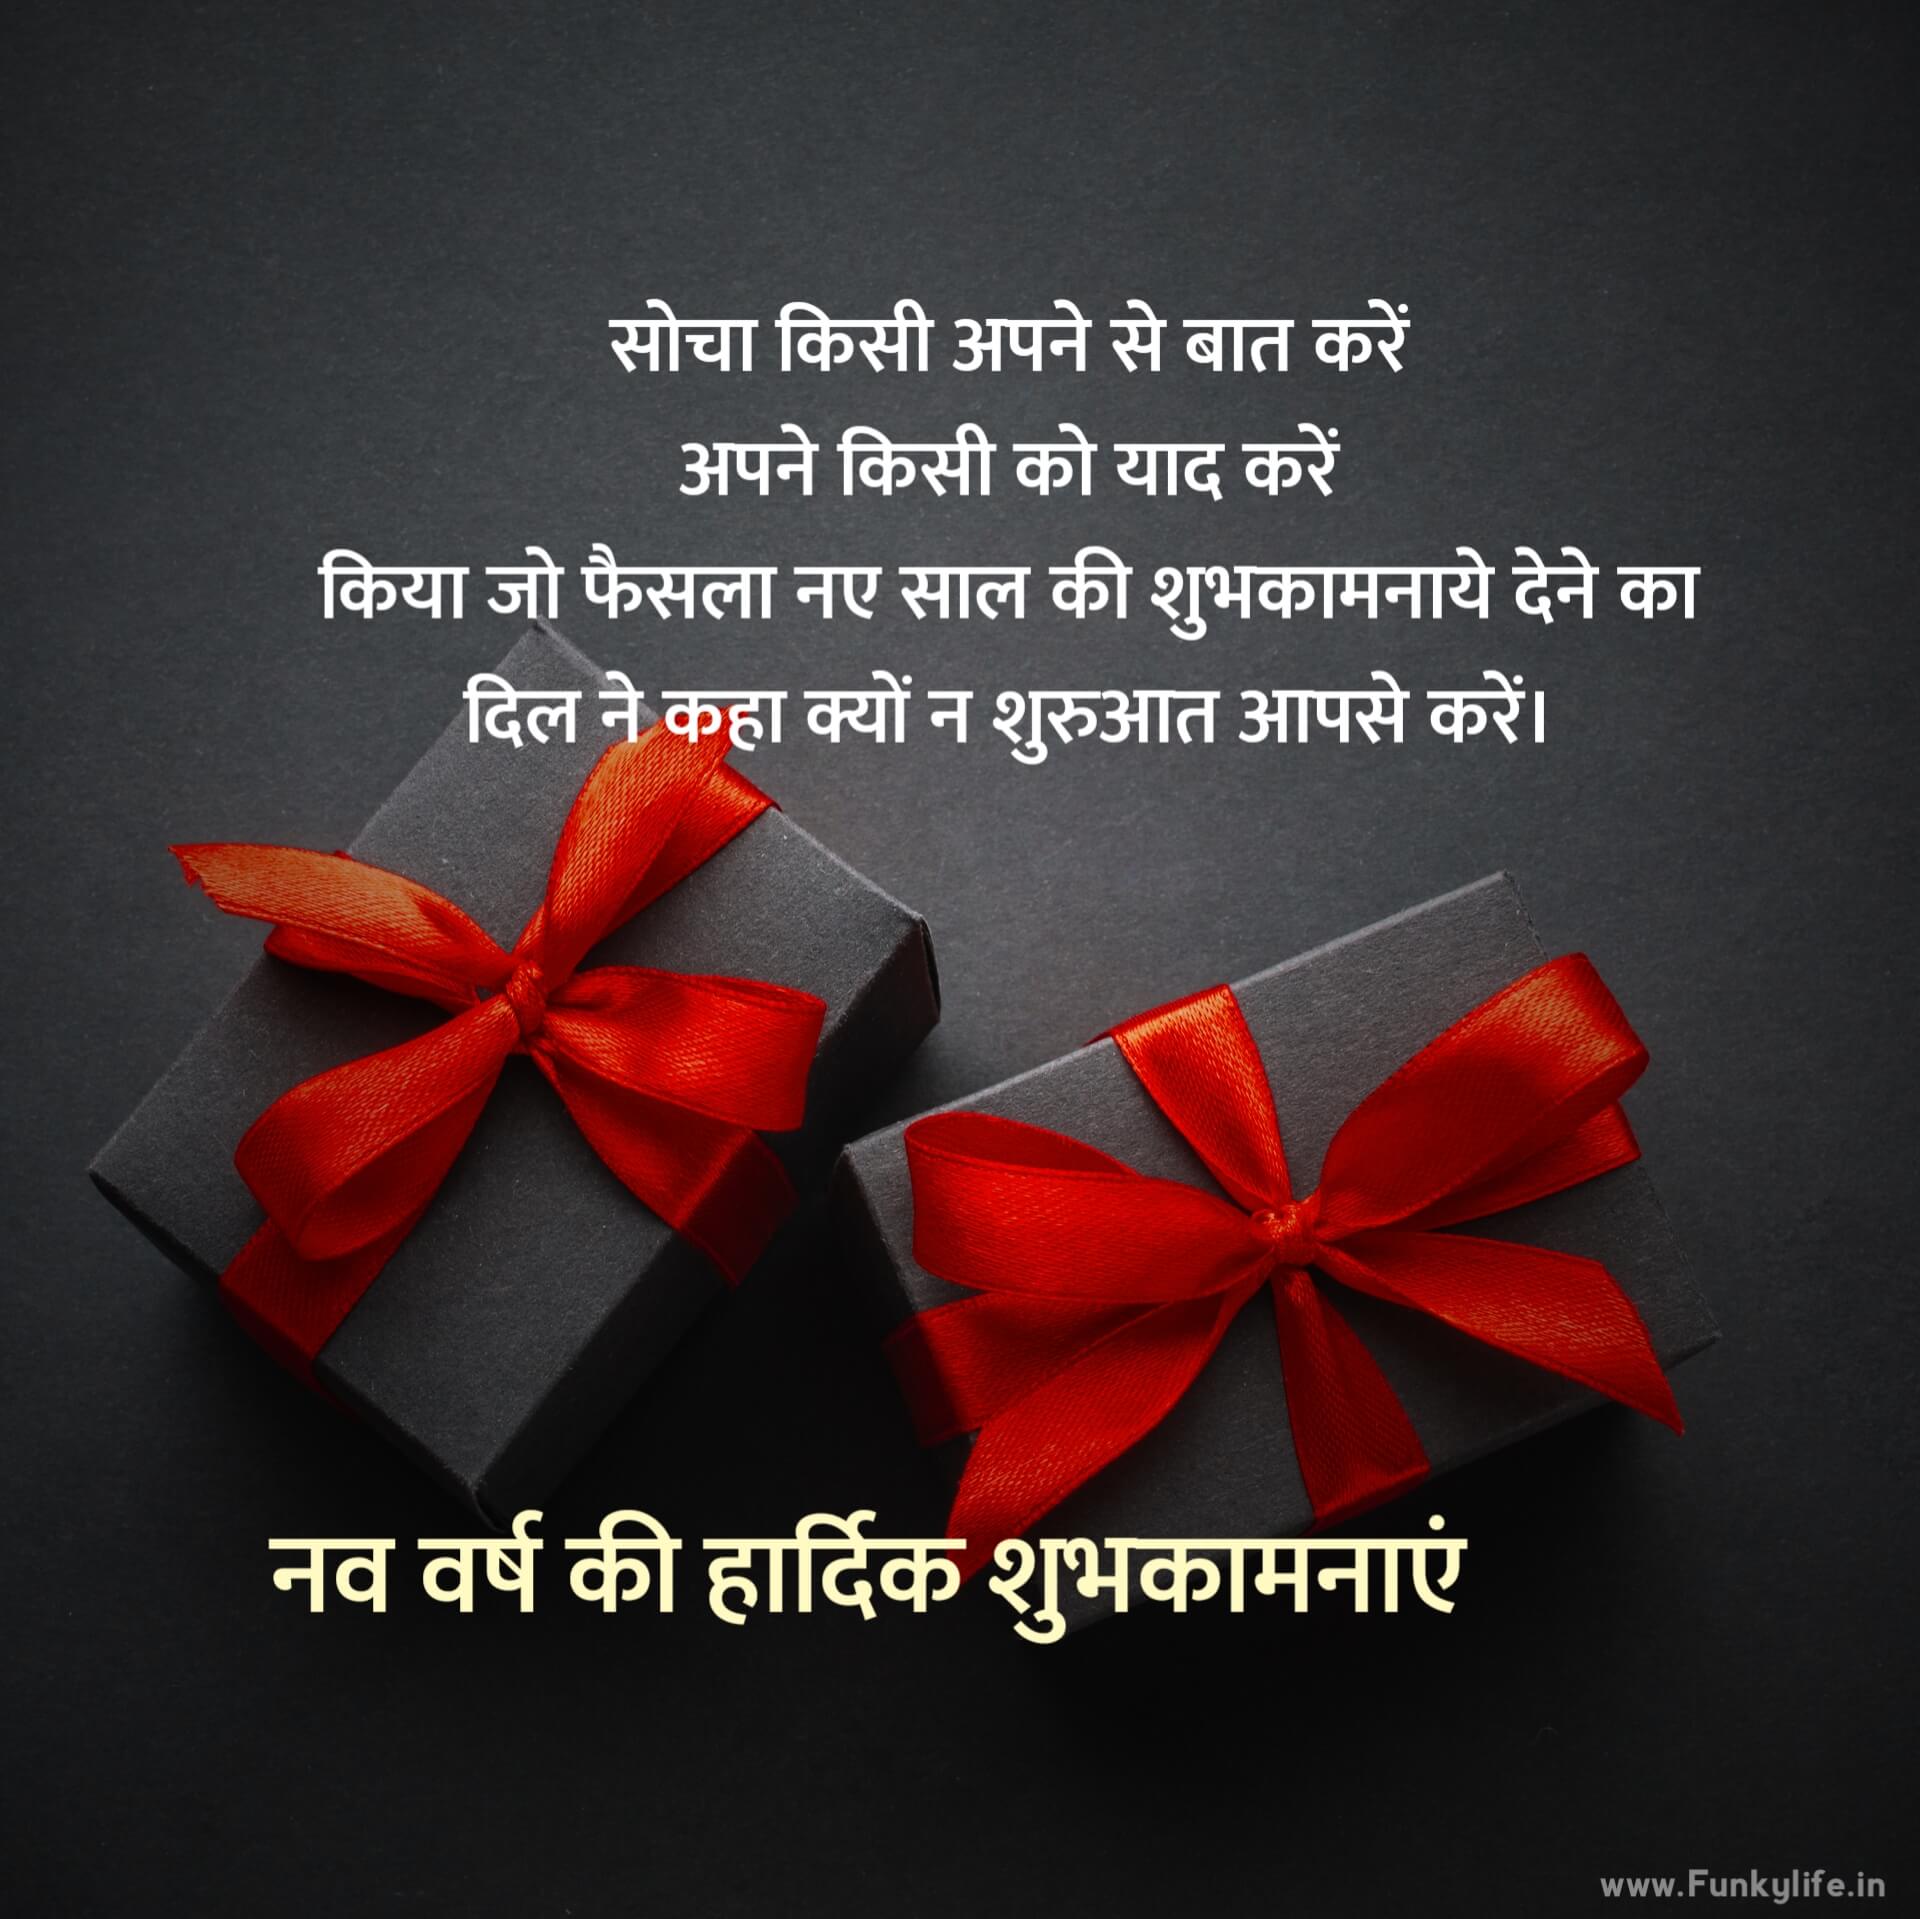 Happy New Year Wishes Status in Hindi